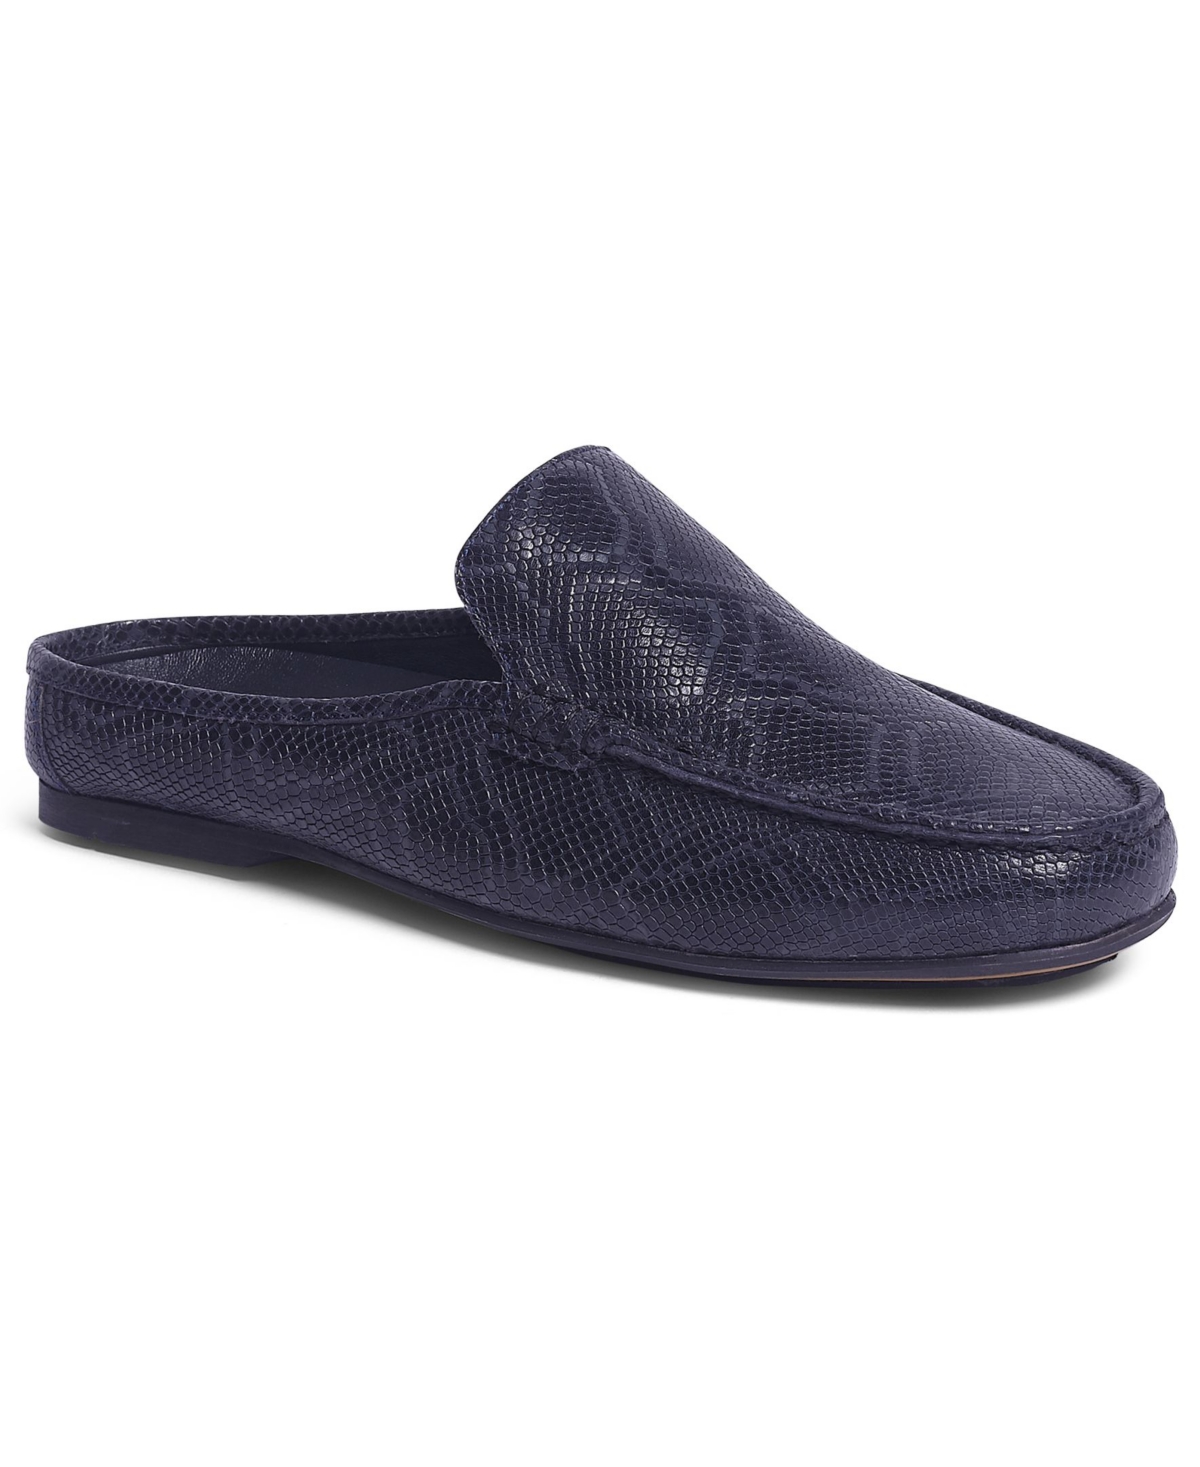 Men's Hector Mule Slip-On Shoes - Navy